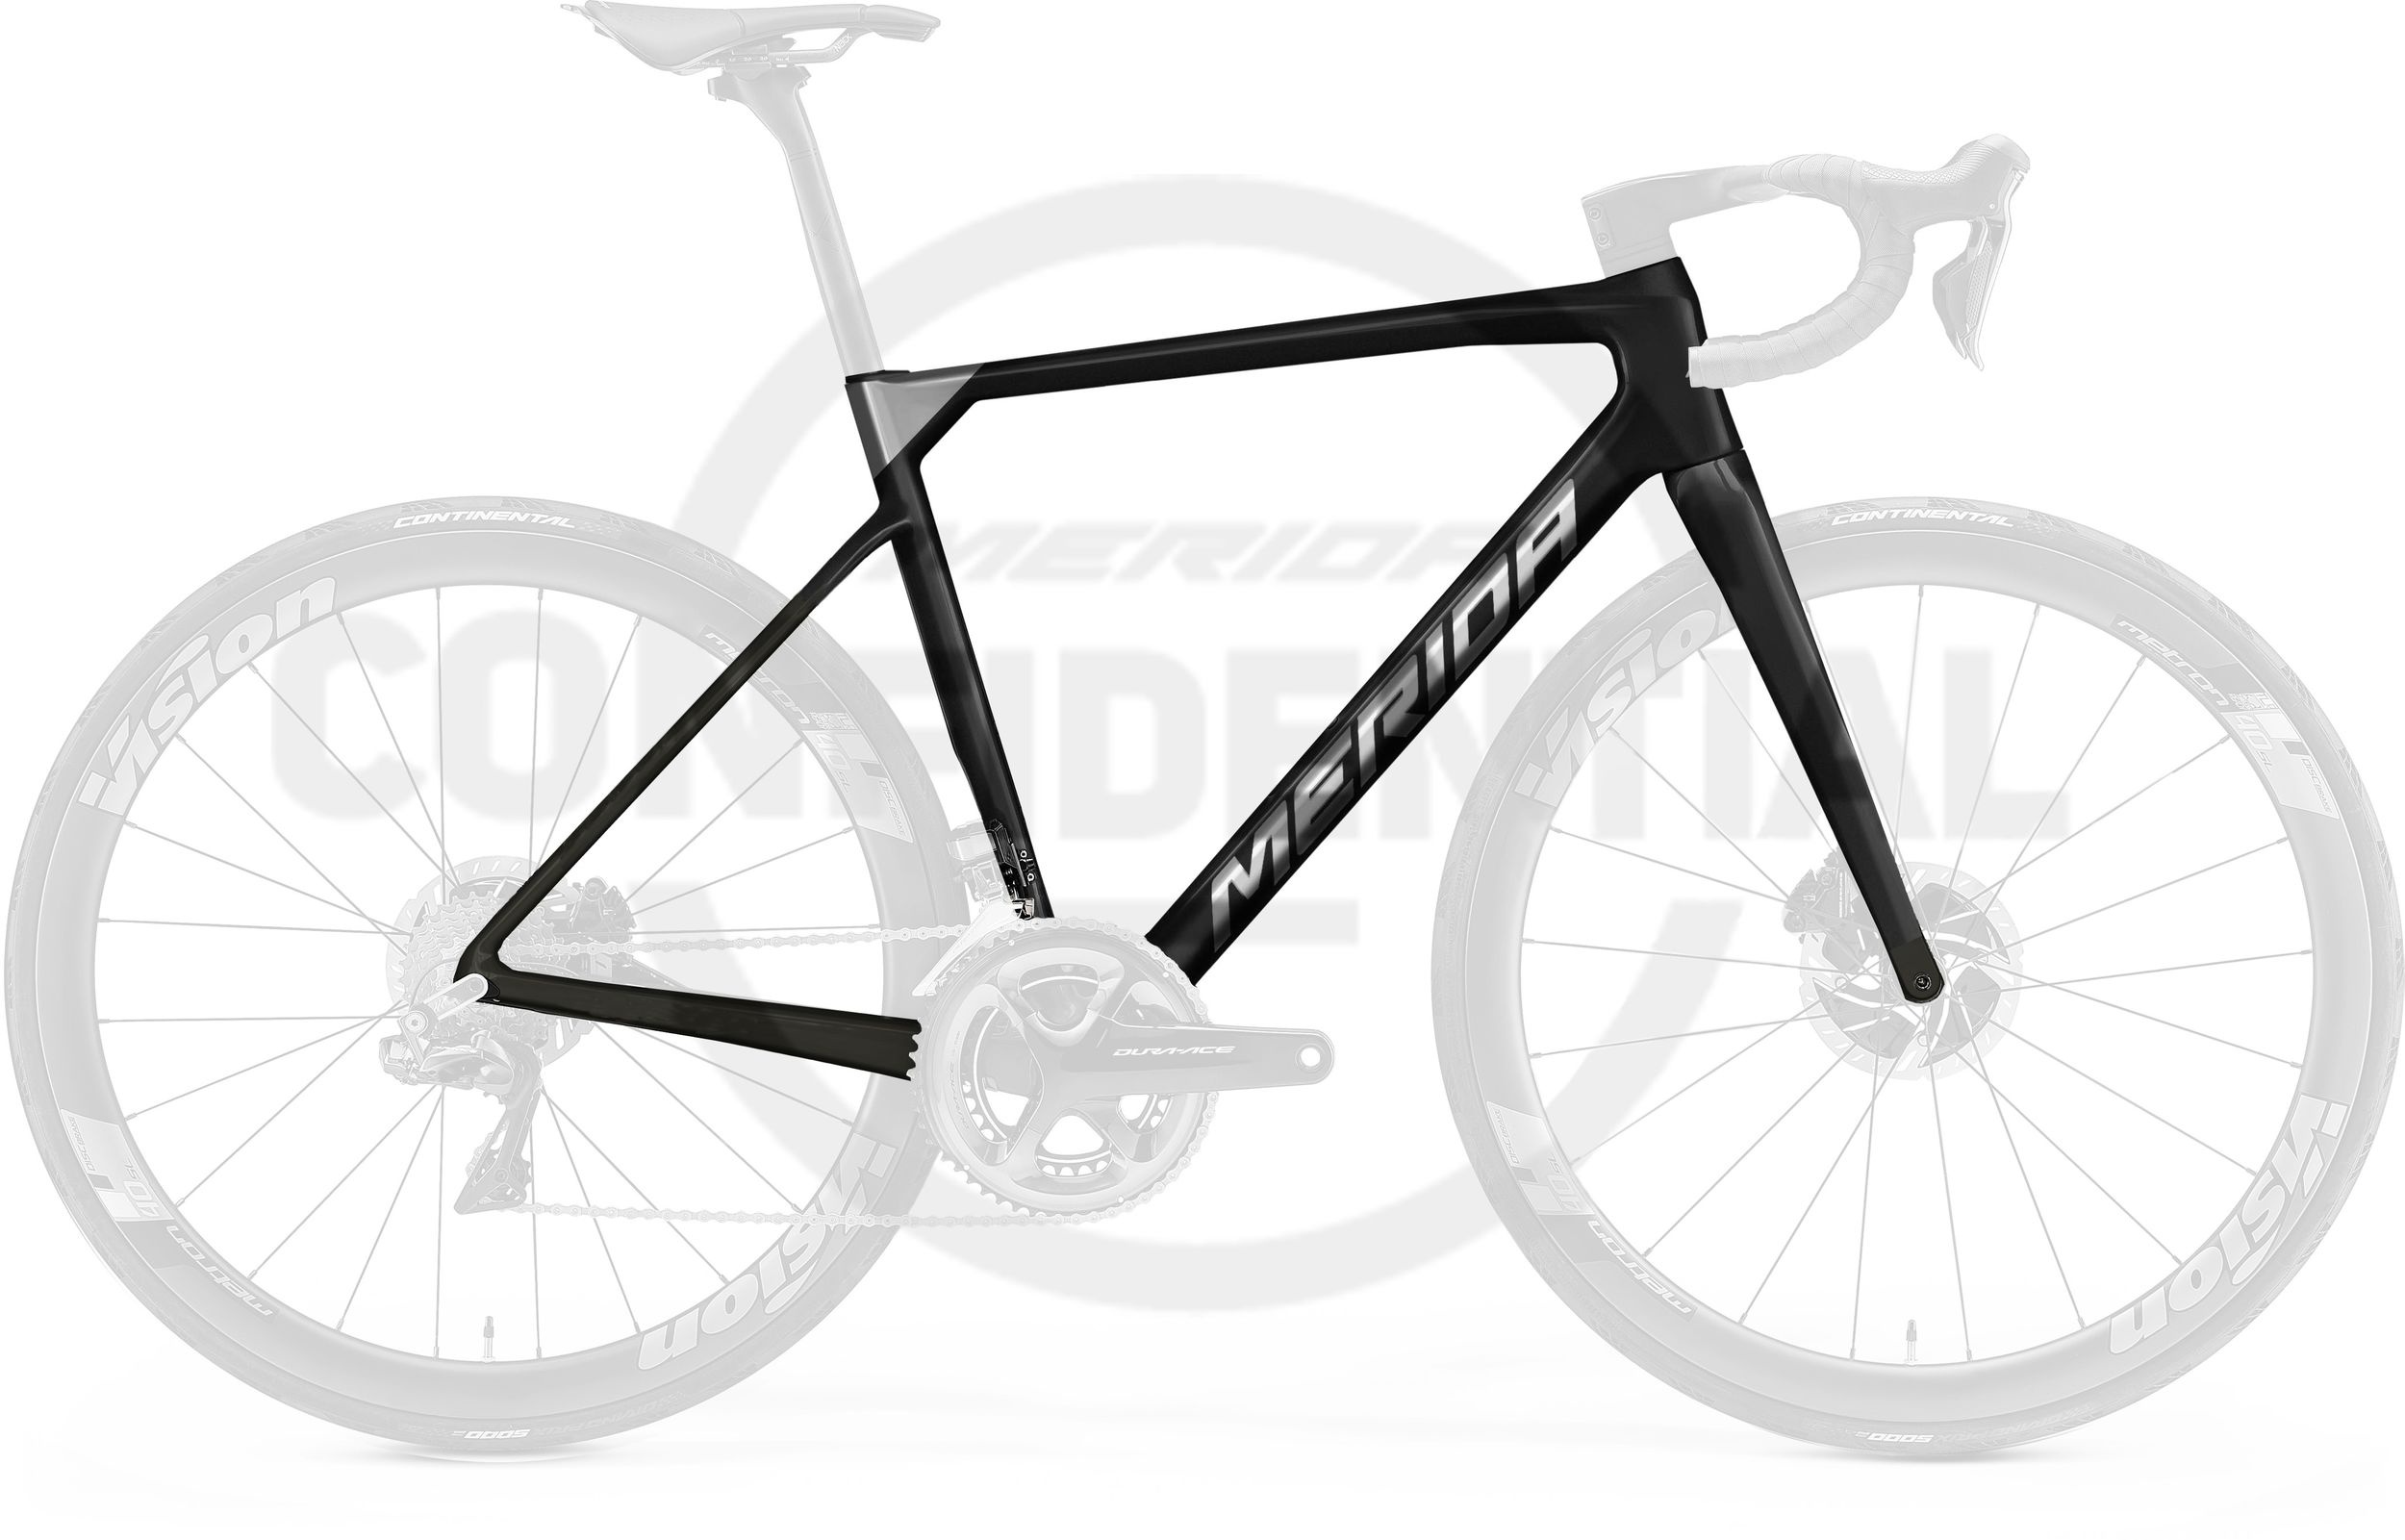 Merida Bikes, Scultura Team CH frame kit, road bike, 2500x1610 HD Desktop